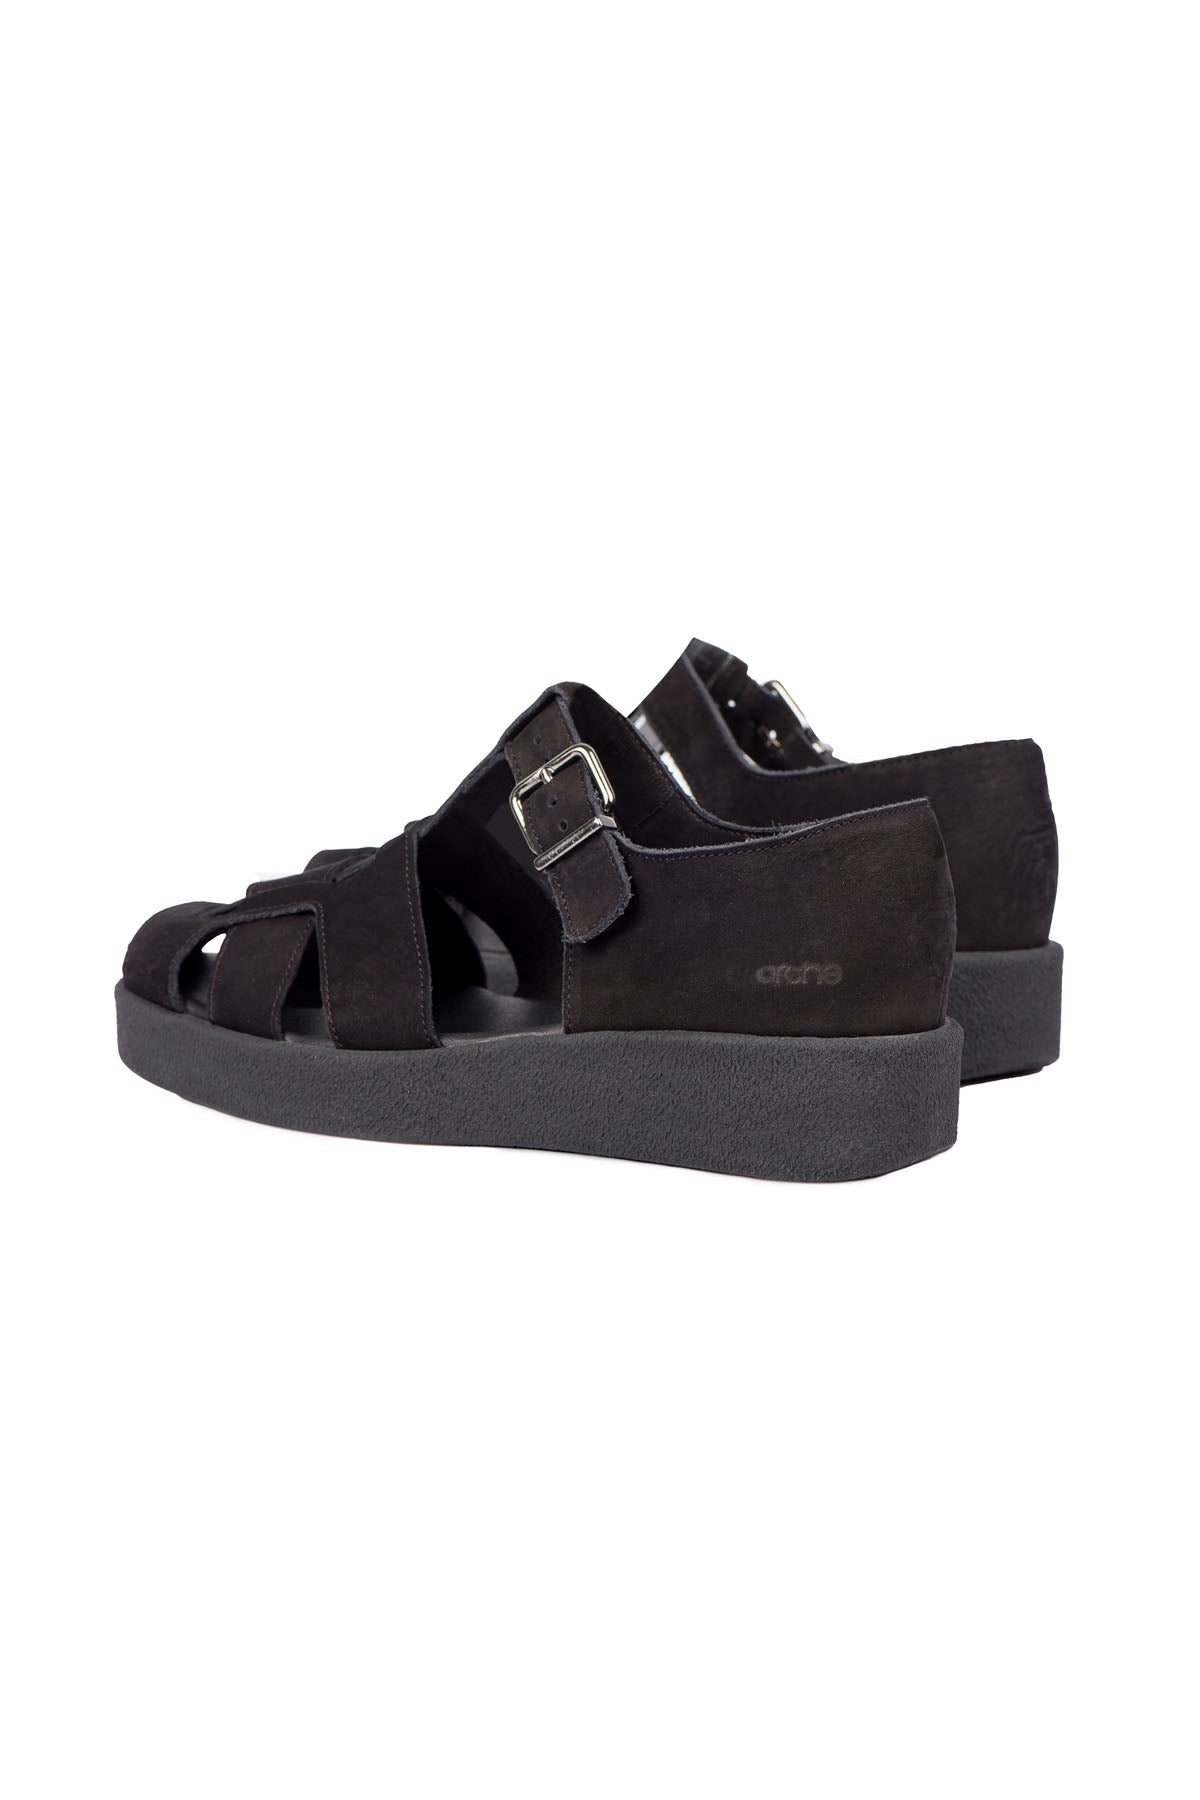 Arche Comaya Closed Sandals - Black